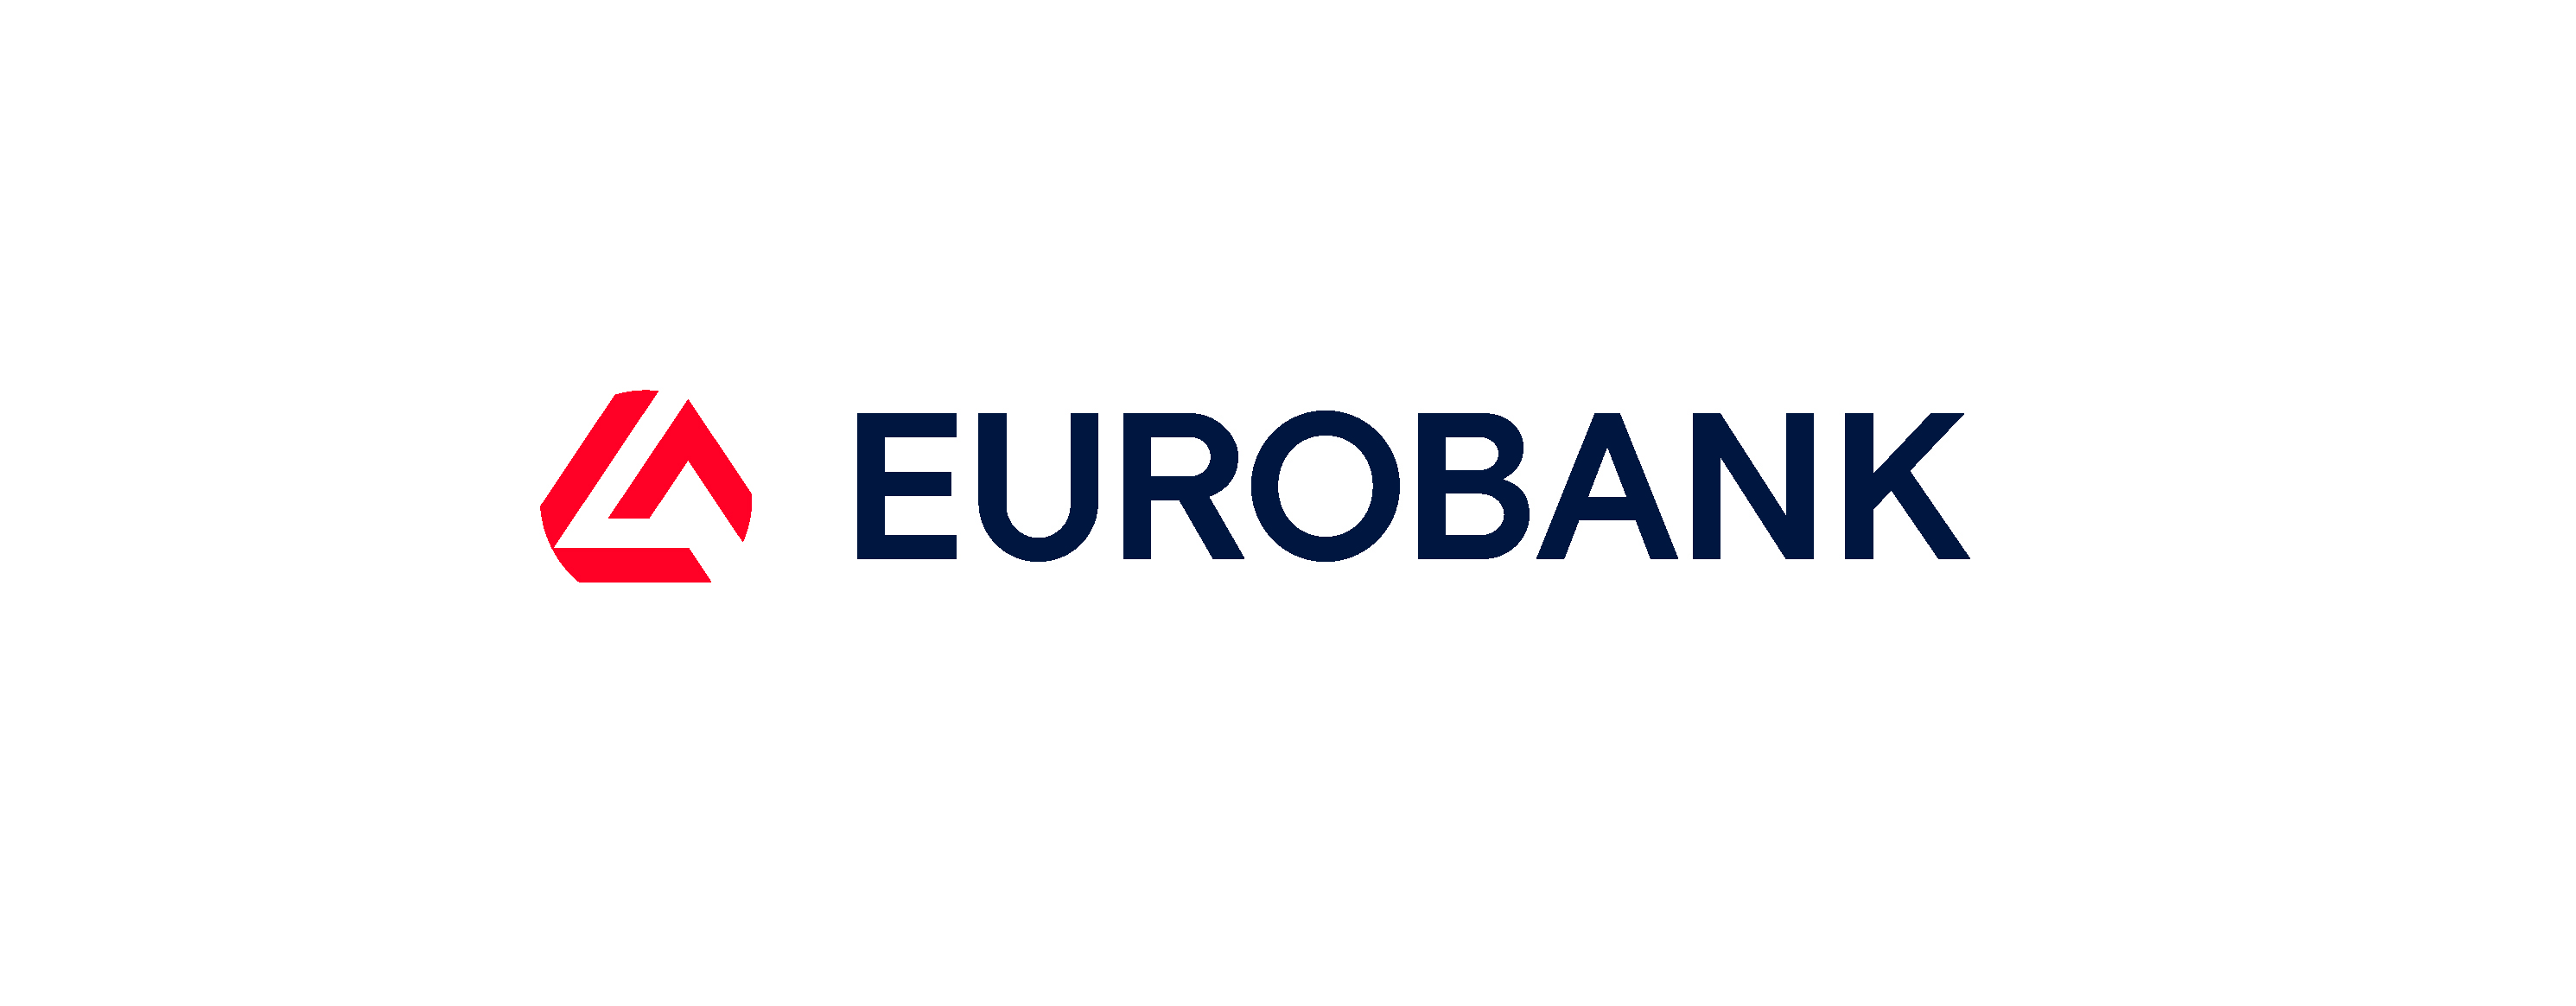 Global Finance| EUROBANK: “Η Καλύτερη Ψηφιακή Τράπεζα για Καταναλωτές στη Δυτική Ευρώπη”